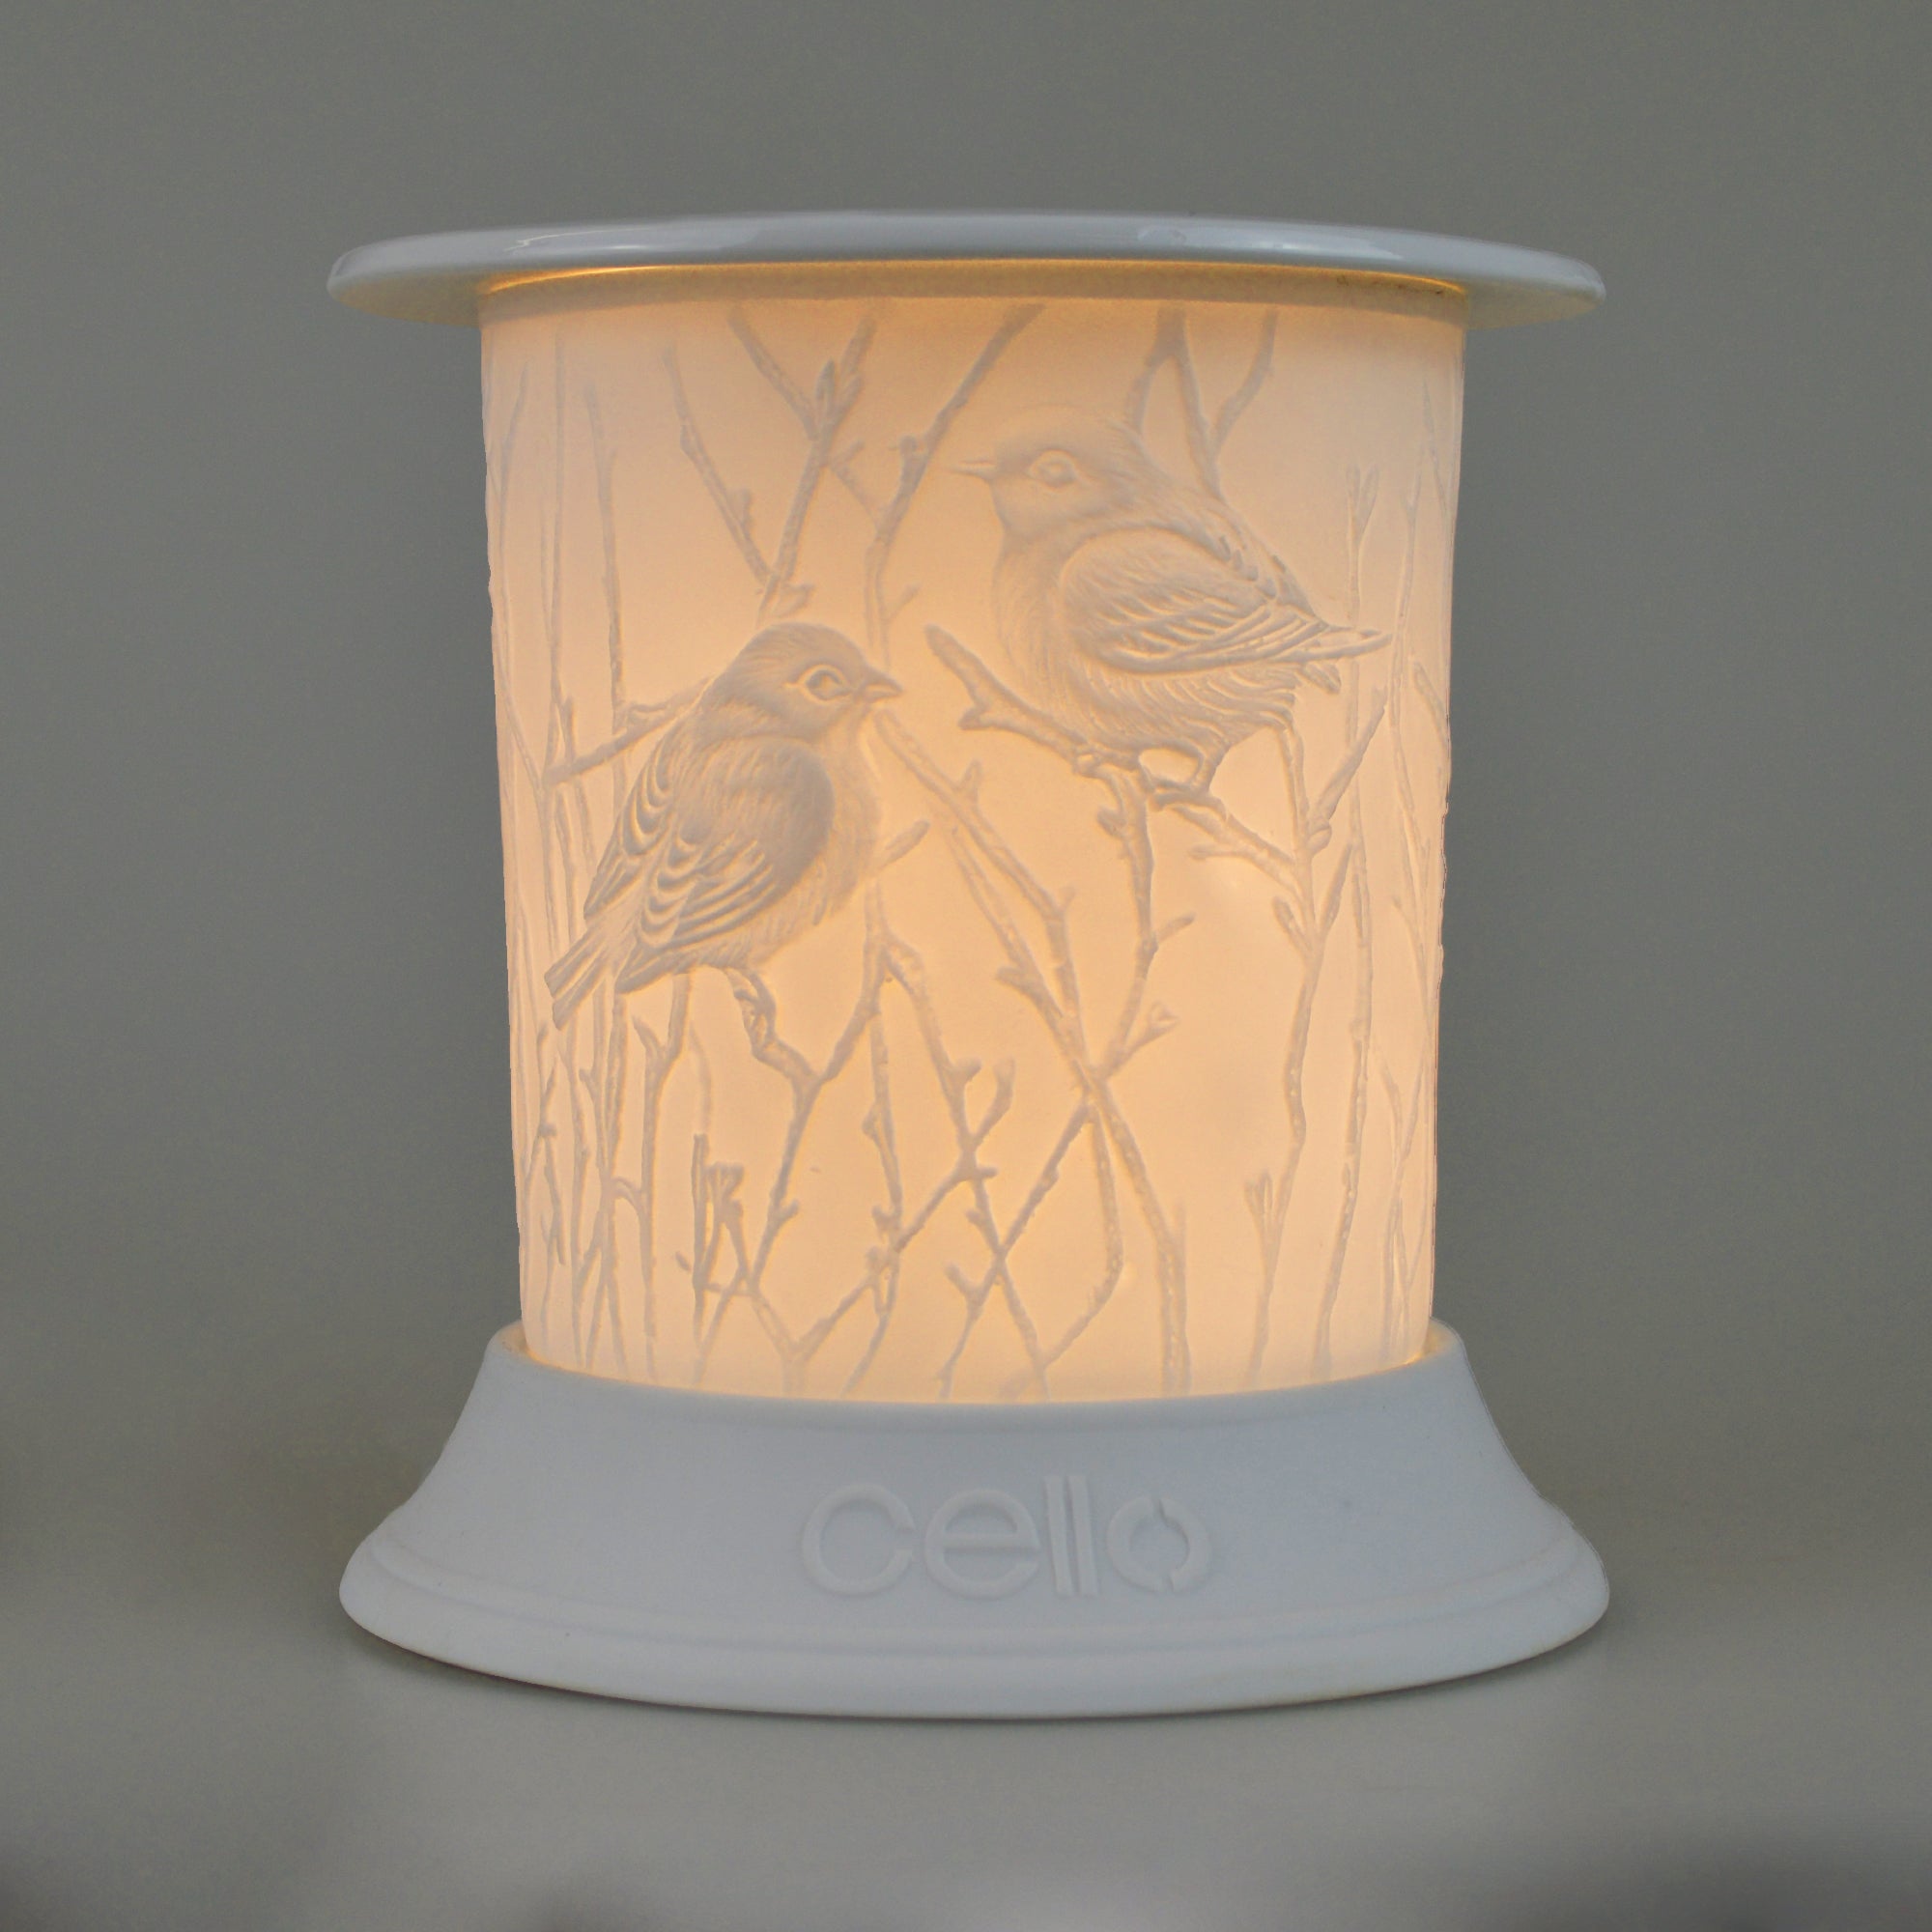 Cello - Bird Straight Porcelain Electric Wax Burner